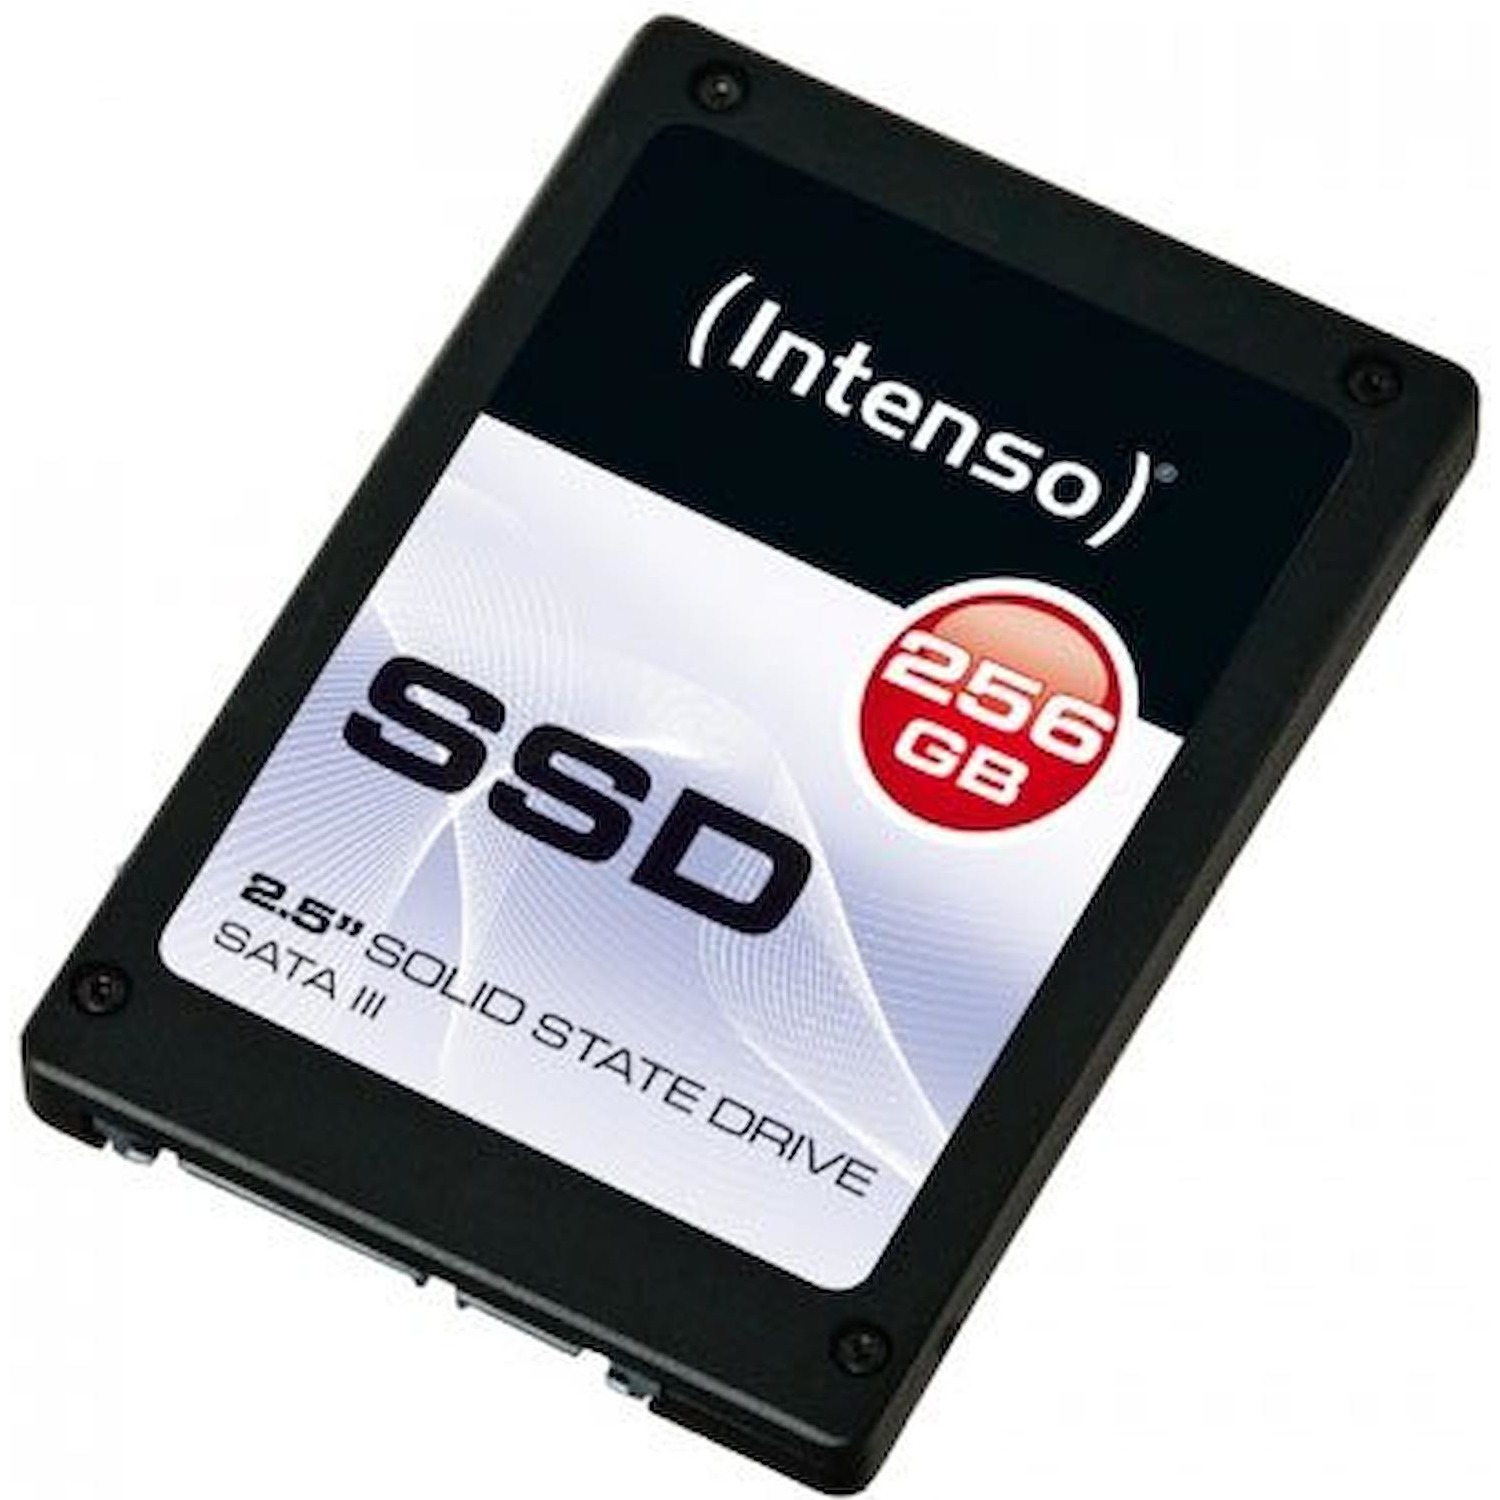 Immagine per HD SSD Intenso 256GB 520MB writing da DIMOStore